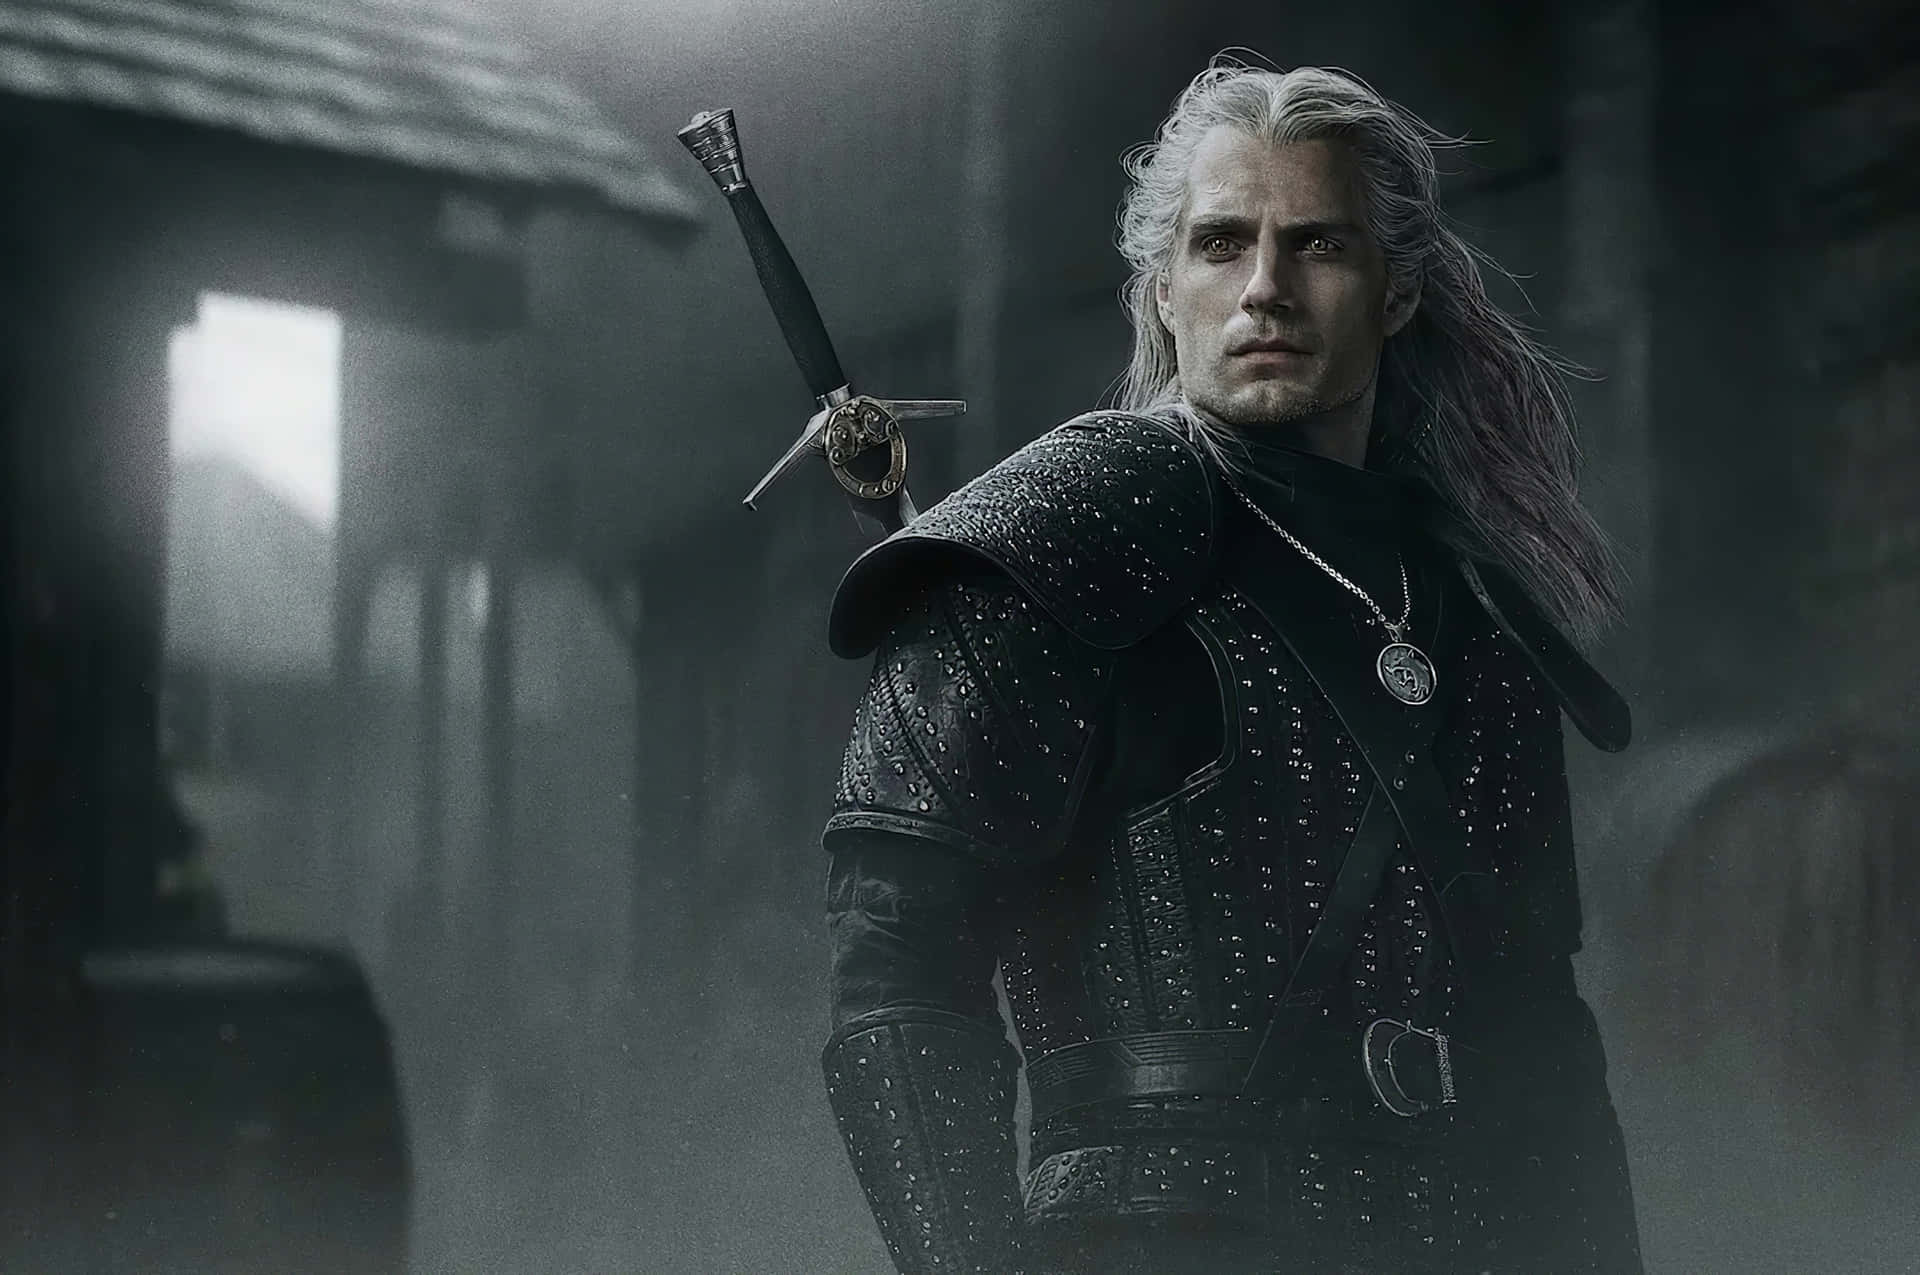 Geralt of Rivia, The Witcher, riding Roach against a picturesque landscape